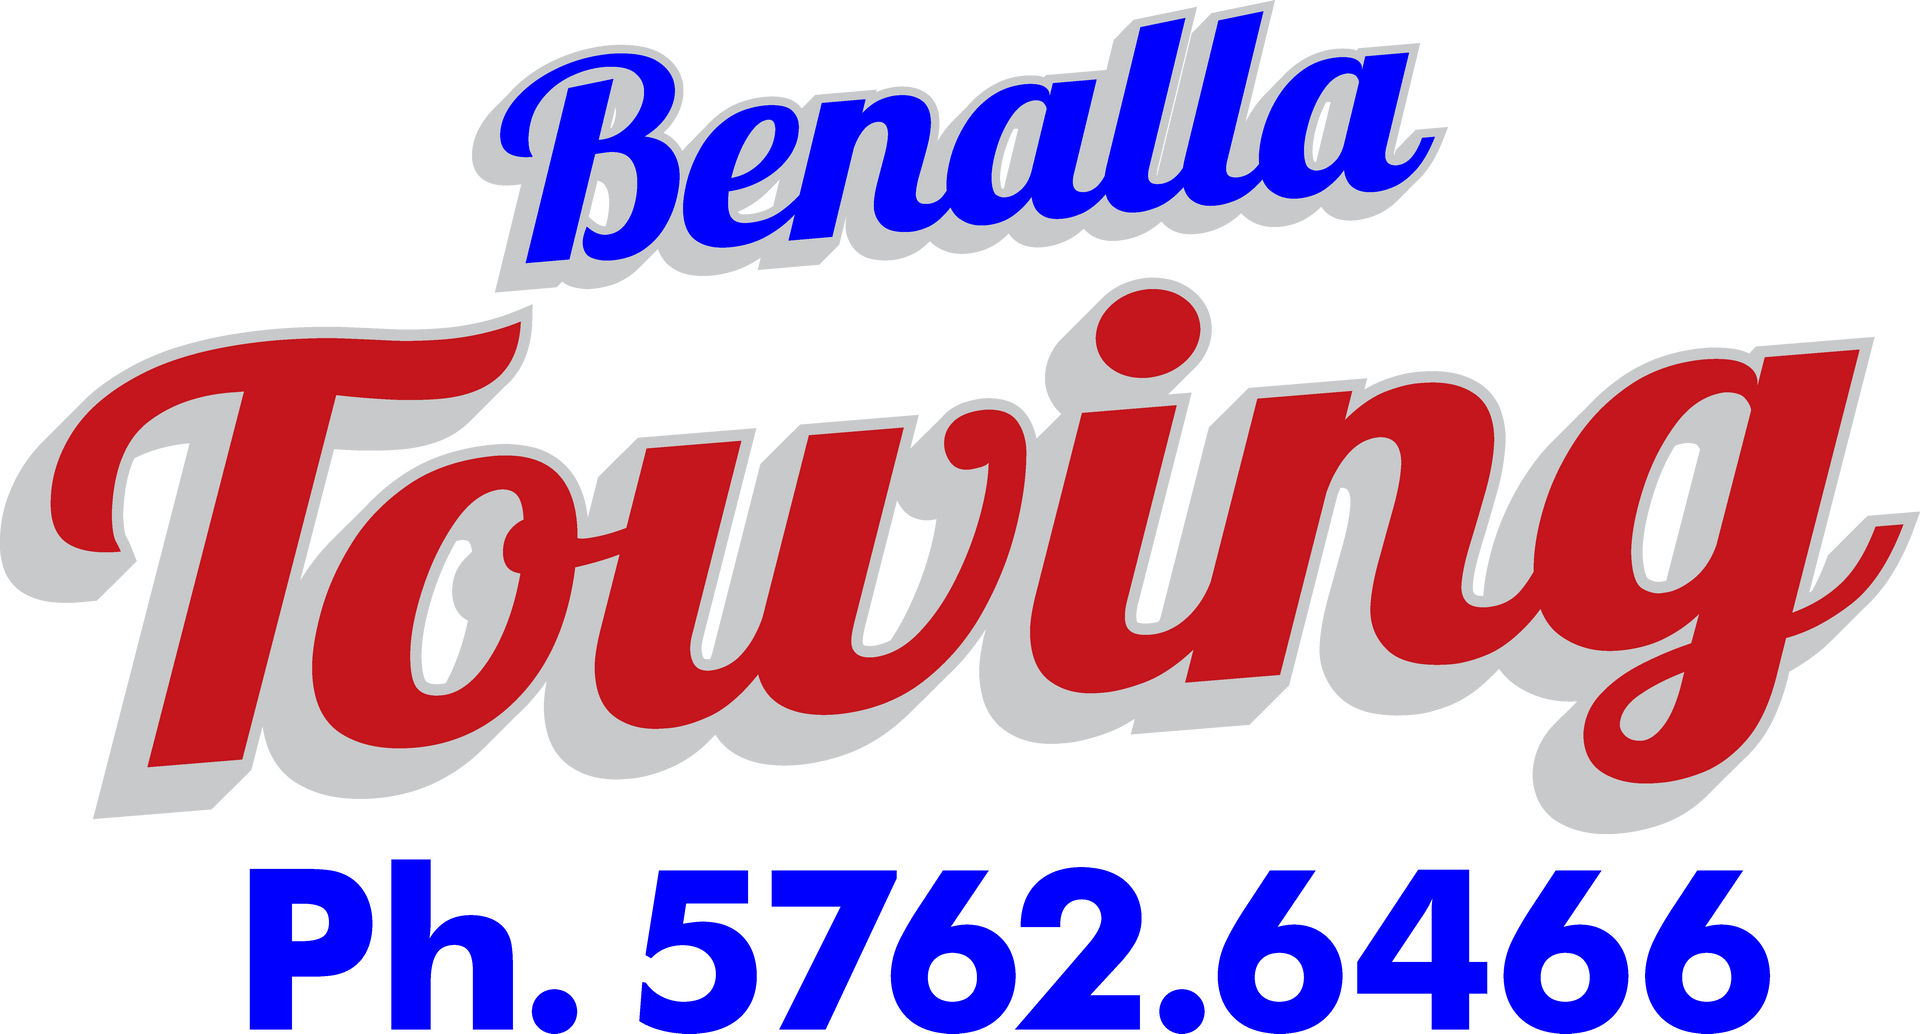 Benalla Towing